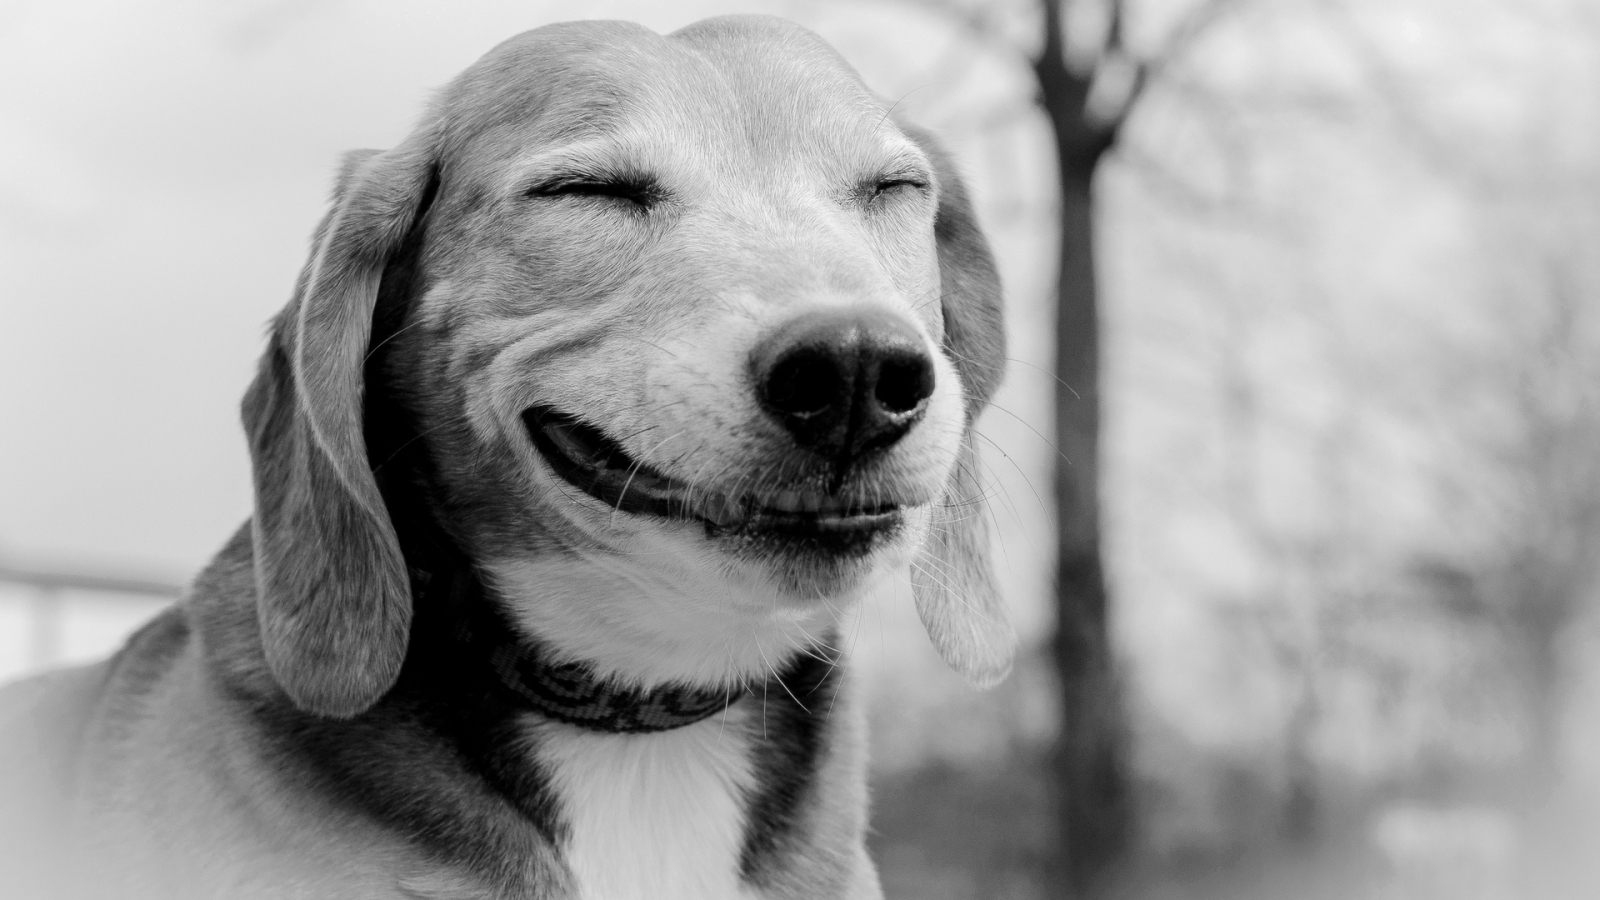 Smiling Dog for 1600 x 900 HDTV resolution